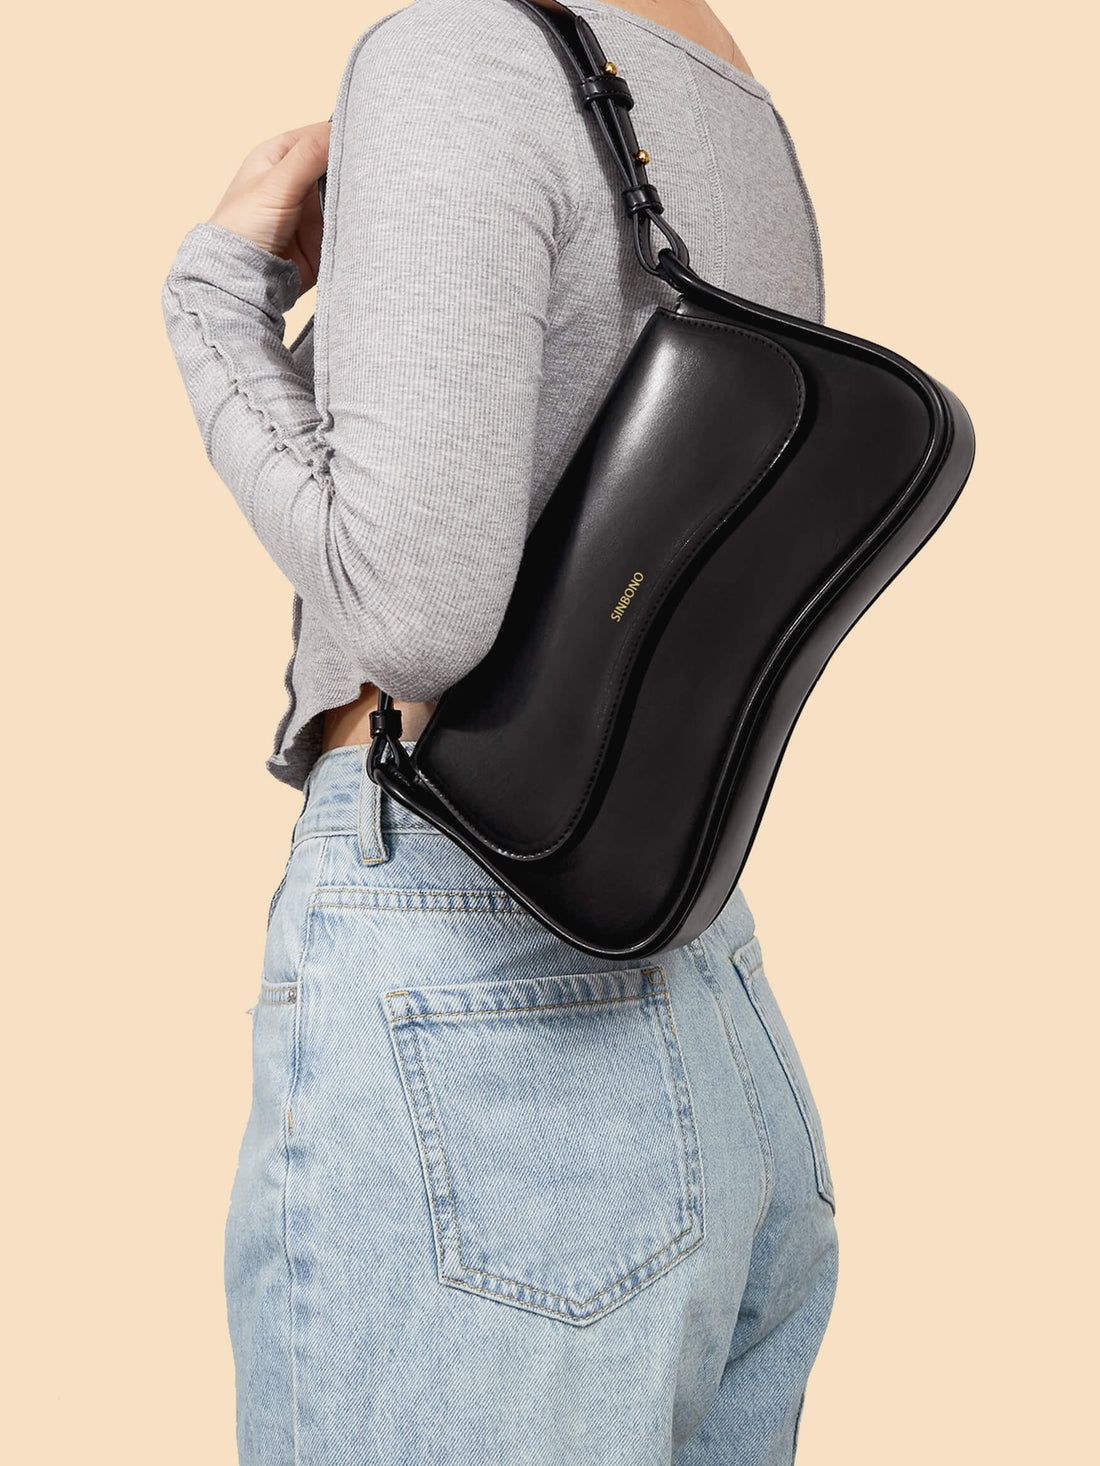 SINBONO Zoe Shoulder Bag  Black - Sustainable Leather Bag